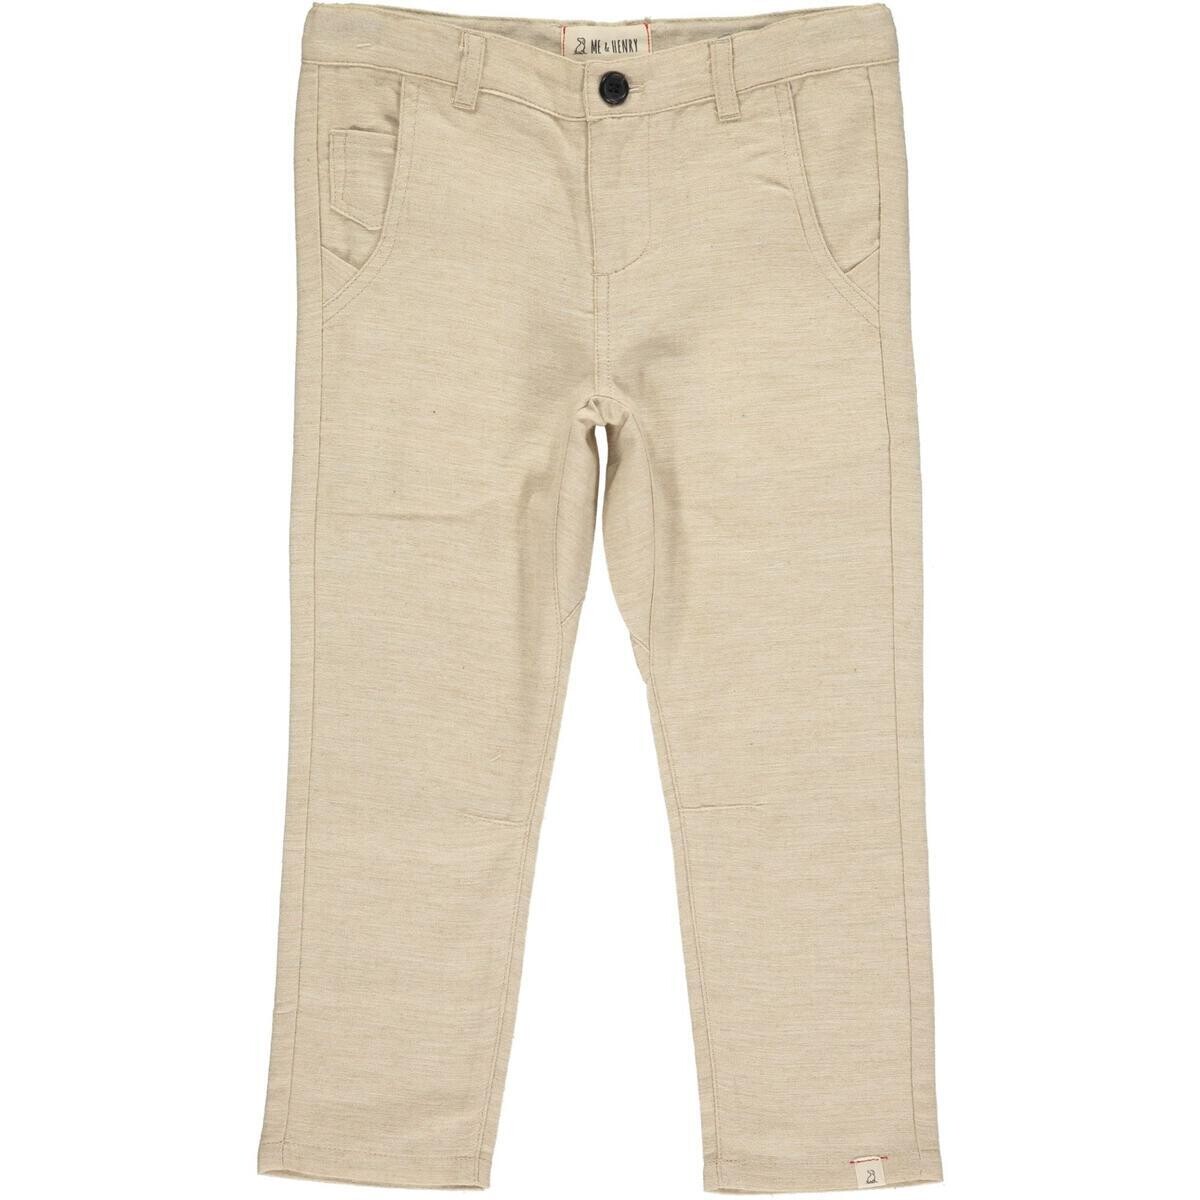 Anthony soft cotton pants Sz9-10yr